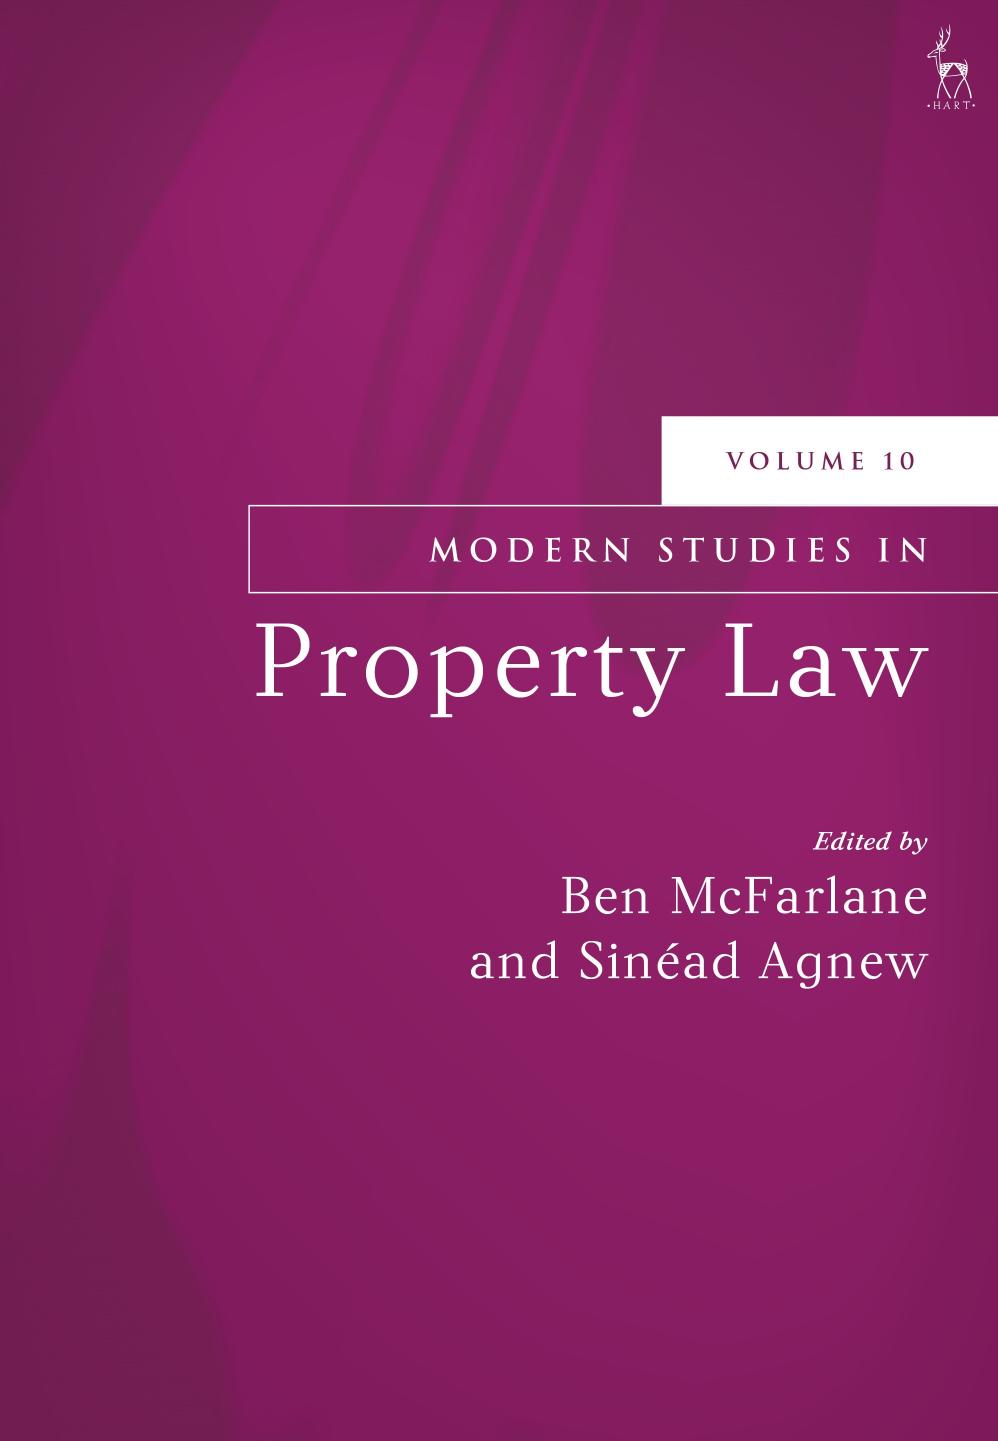 Modern Studies in Property Law: Volume 10 by Ben McFarlane; Sinéad Agnew (editors)